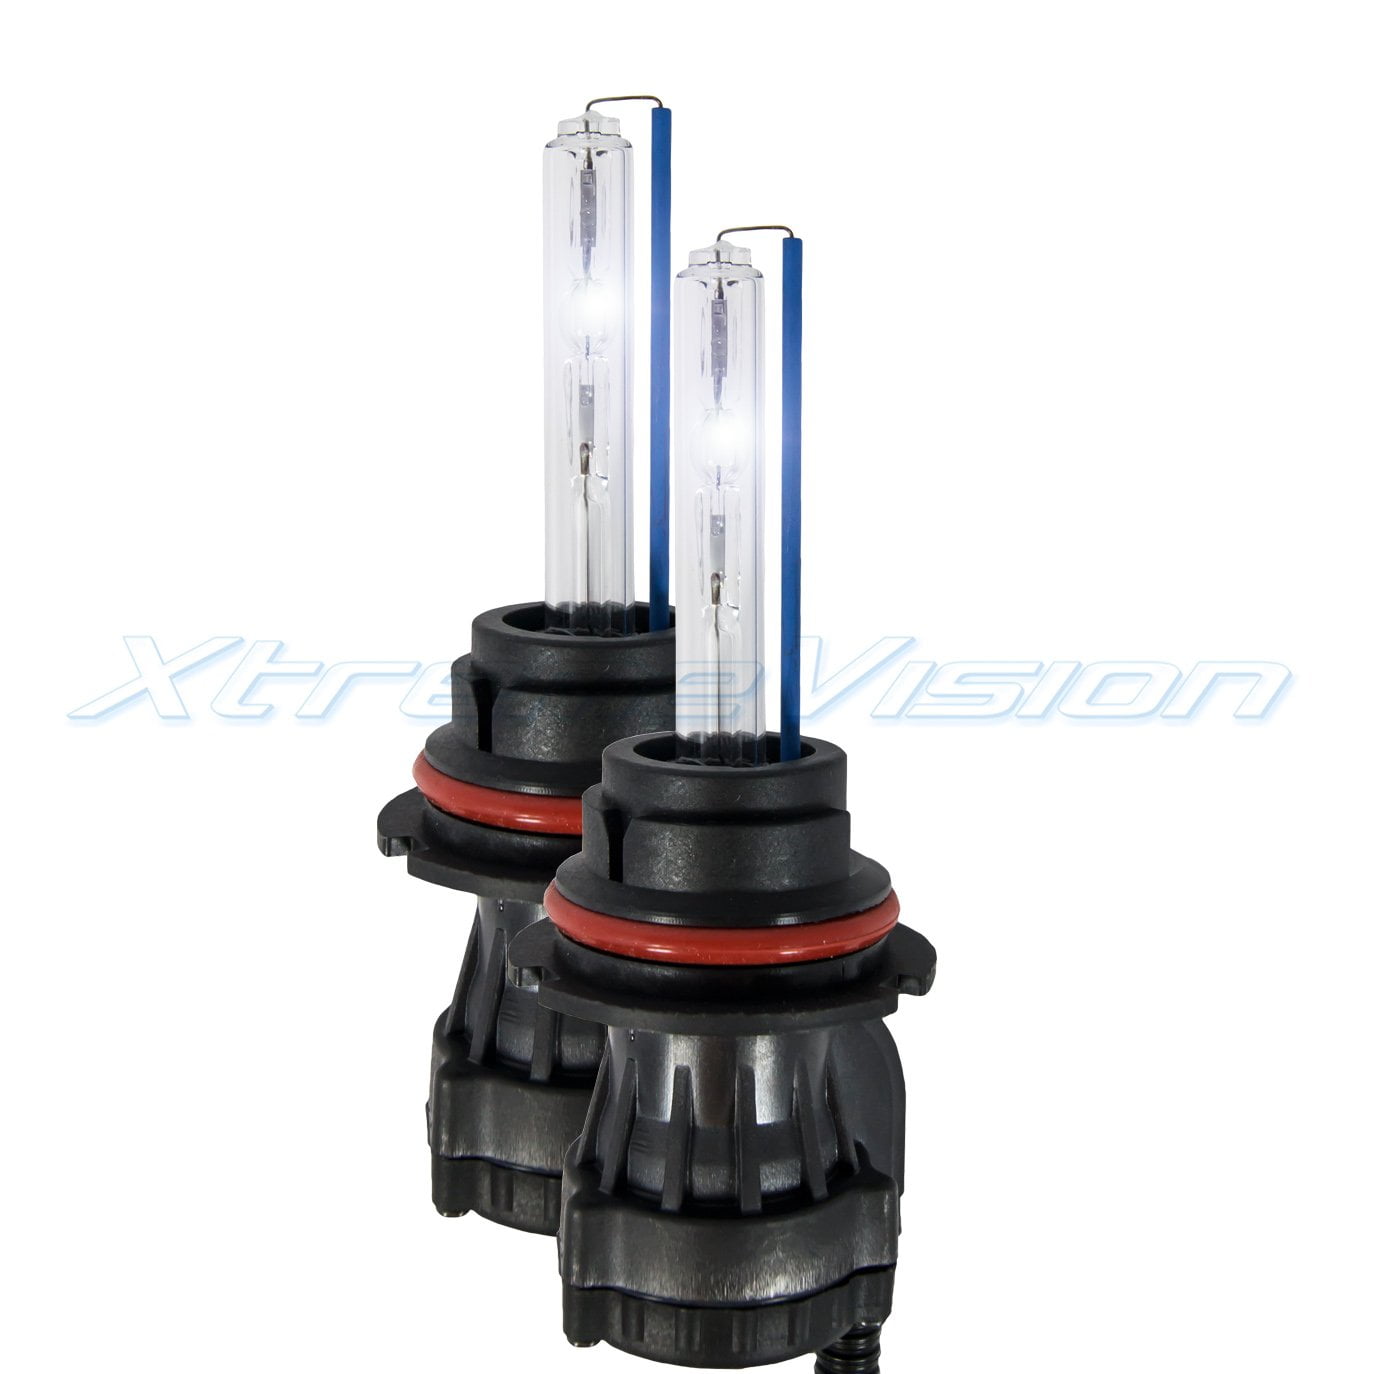 510+ Xenon Light Bulbs Stock Photos, Pictures & Royalty-Free